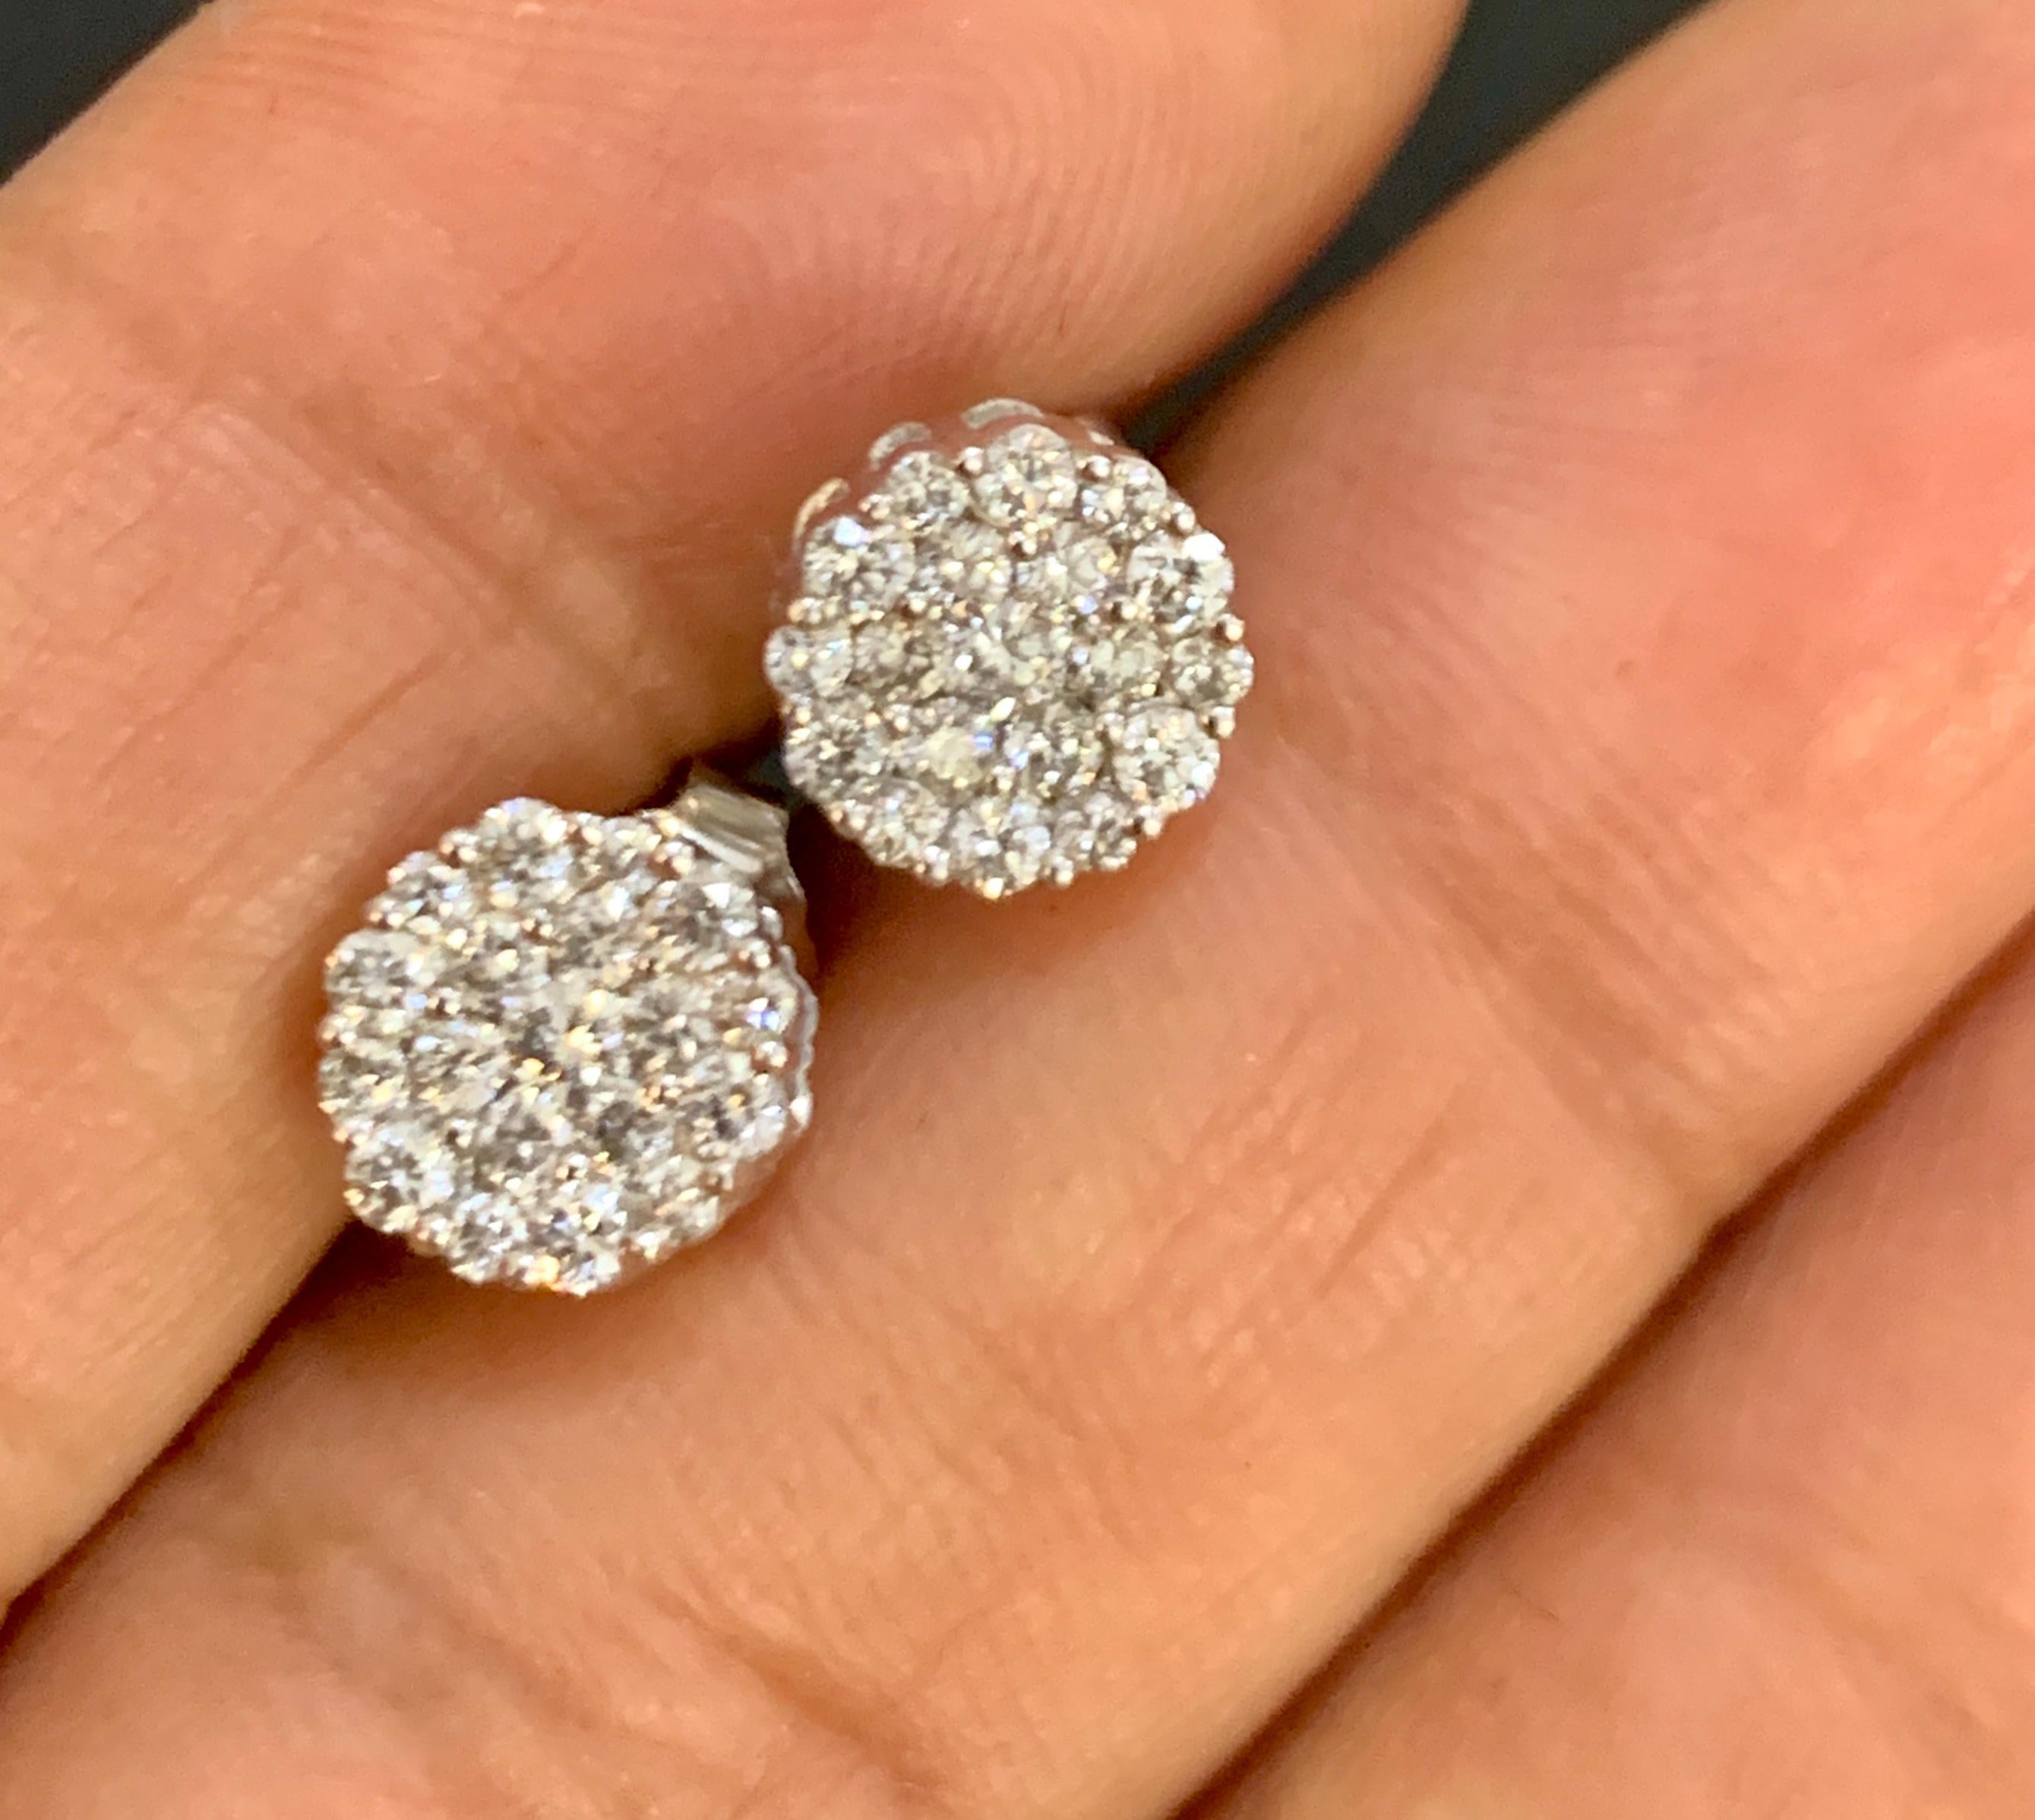 1.6 carat diamond earrings